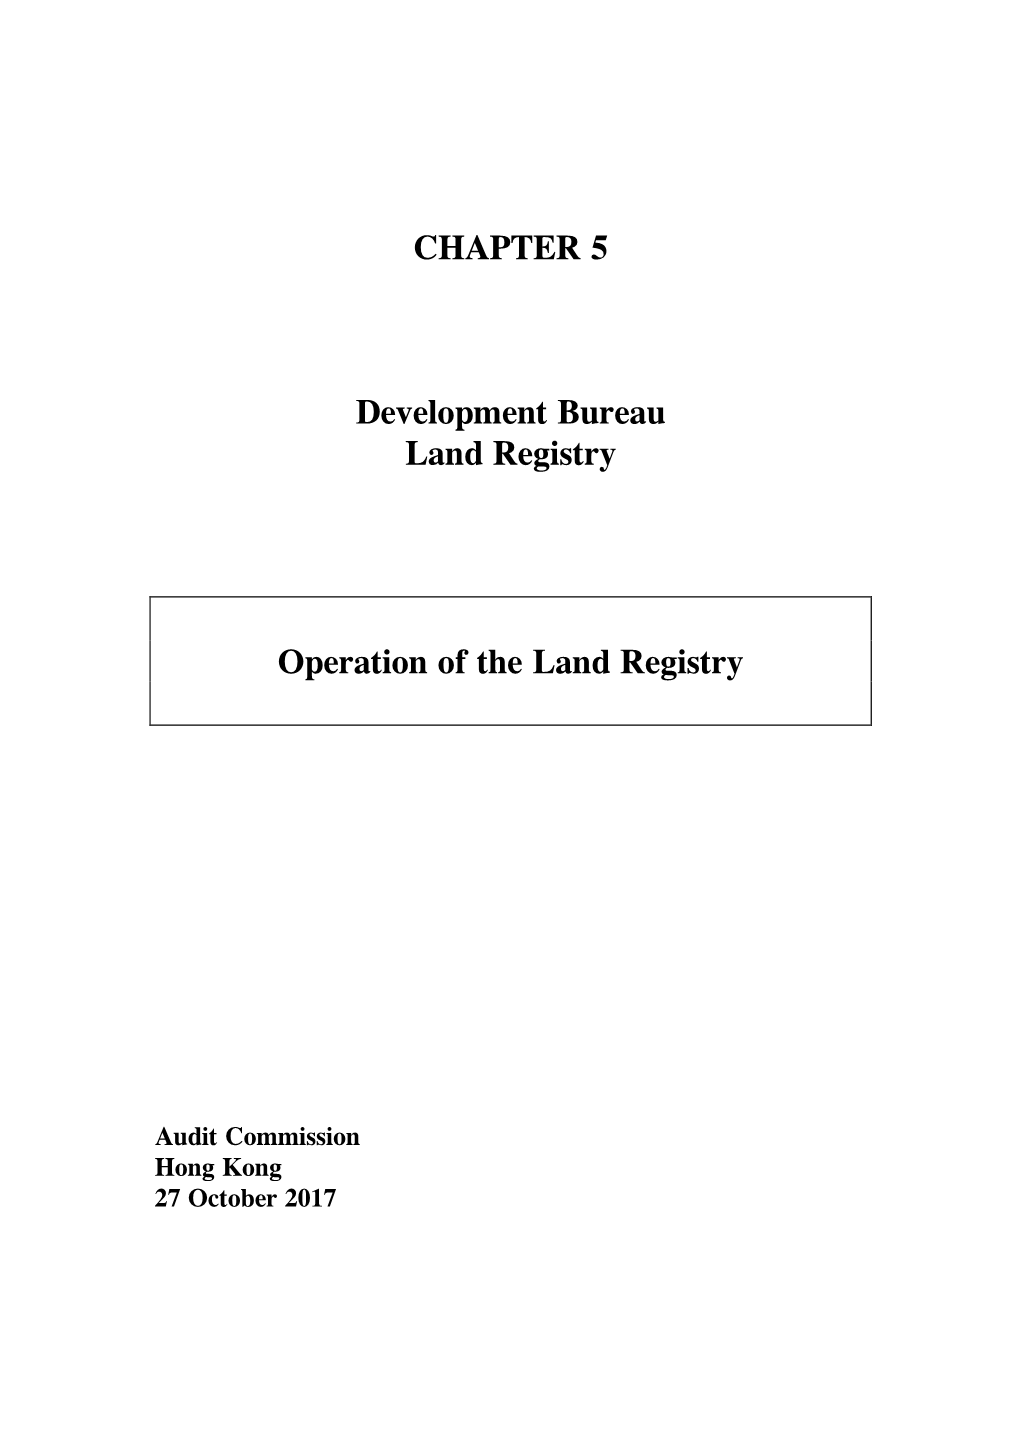 CHAPTER 5 Development Bureau Land Registry Operation of The